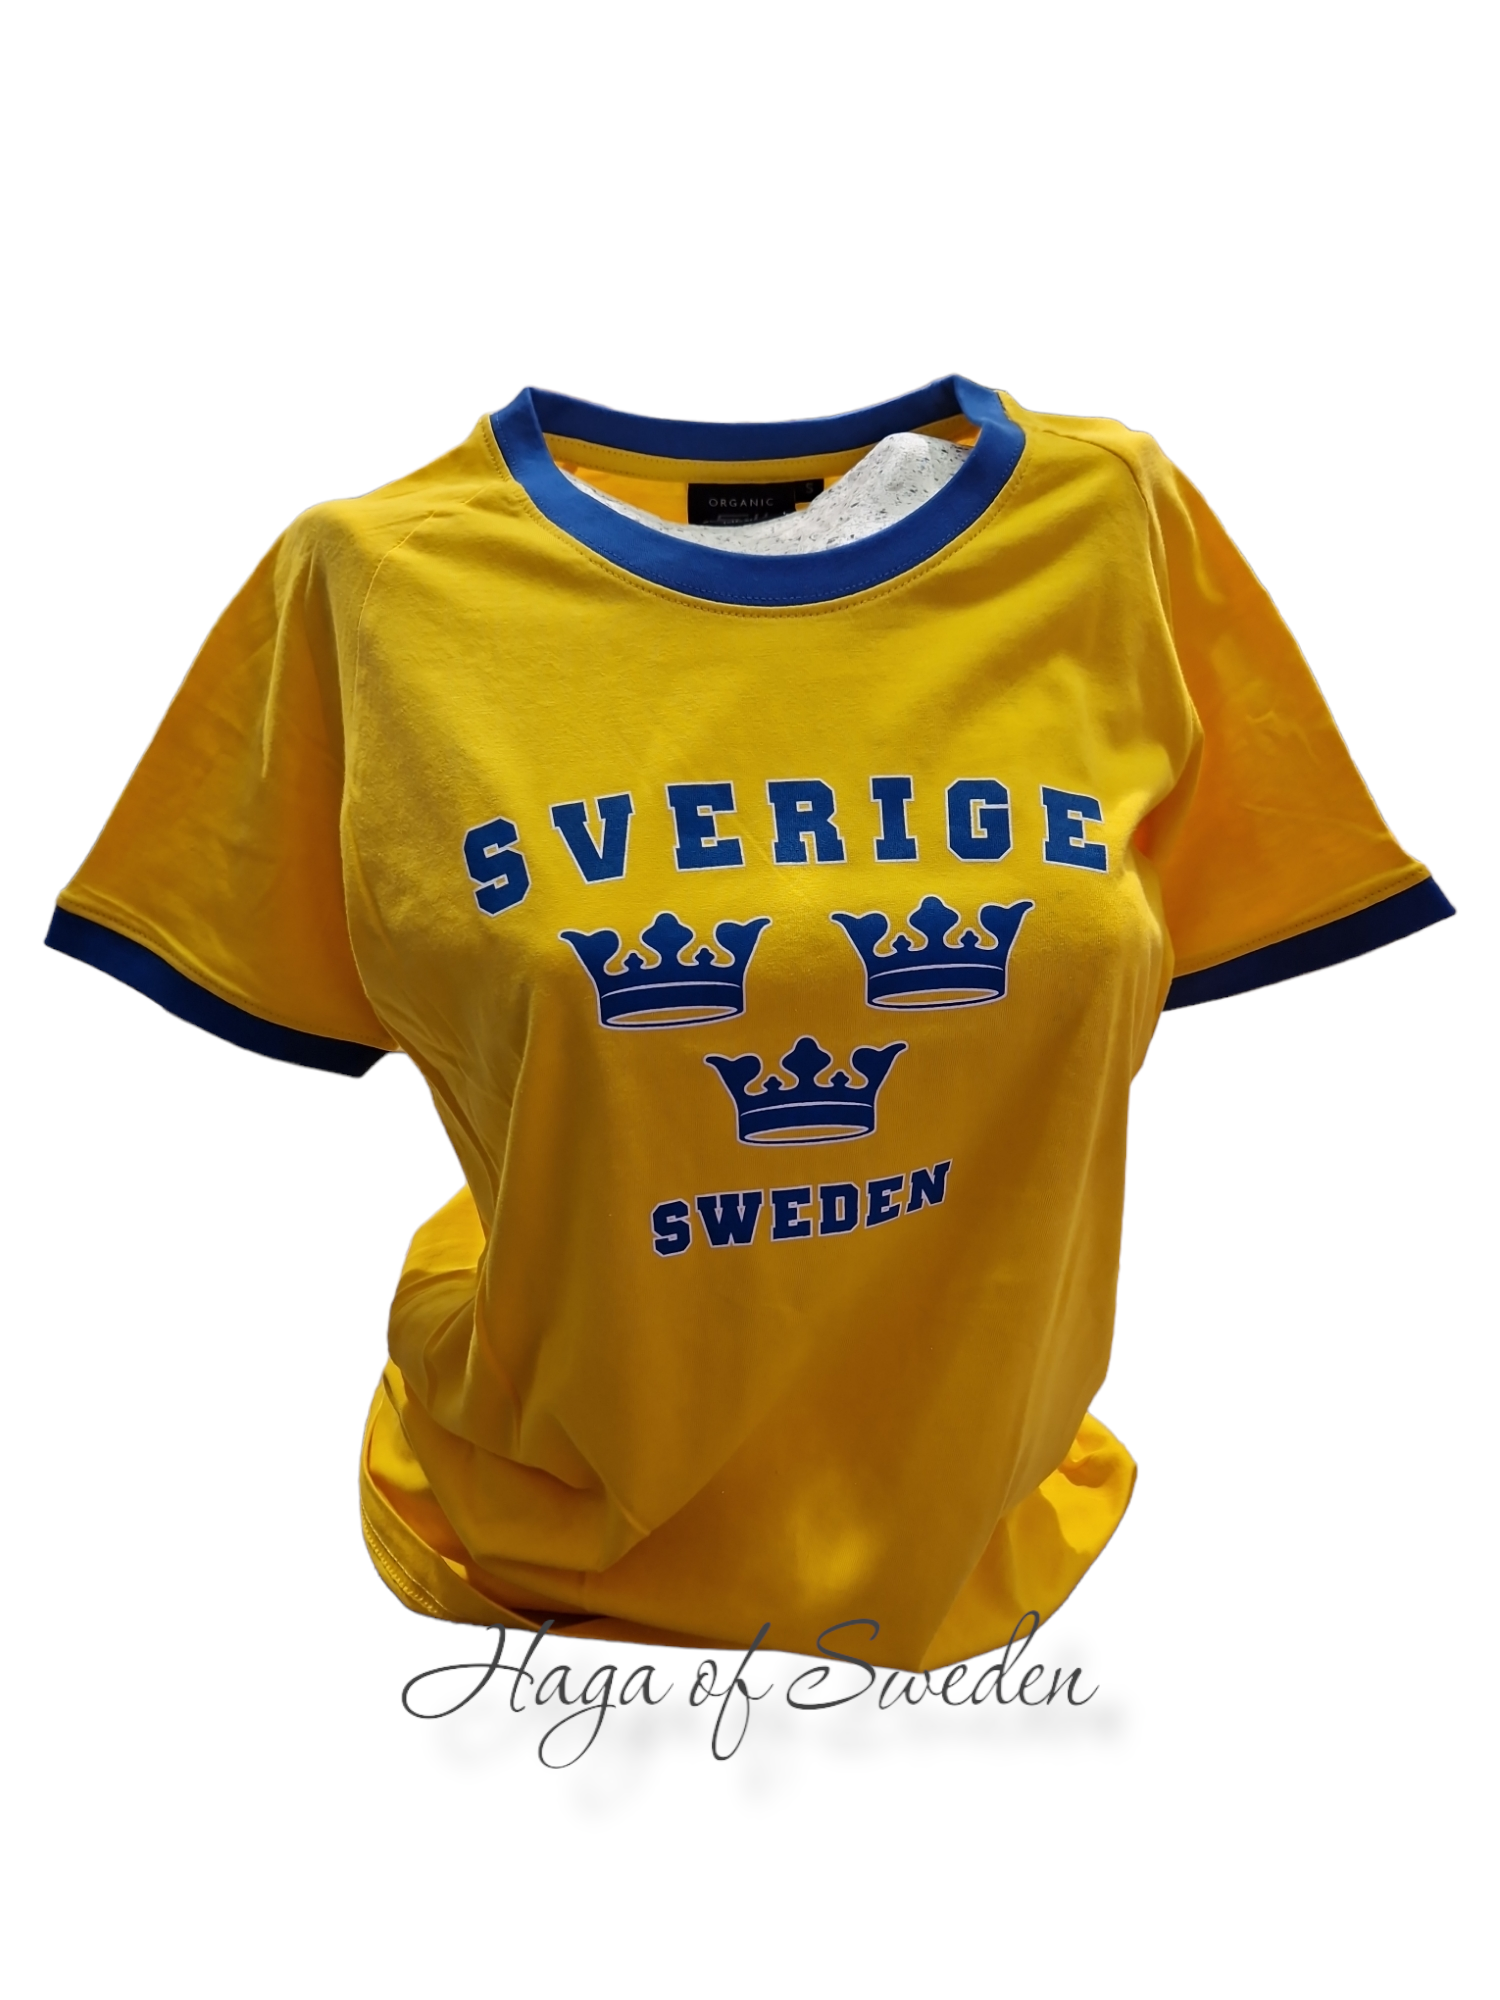 T-SHIRT Sweden yellow / blue kronor